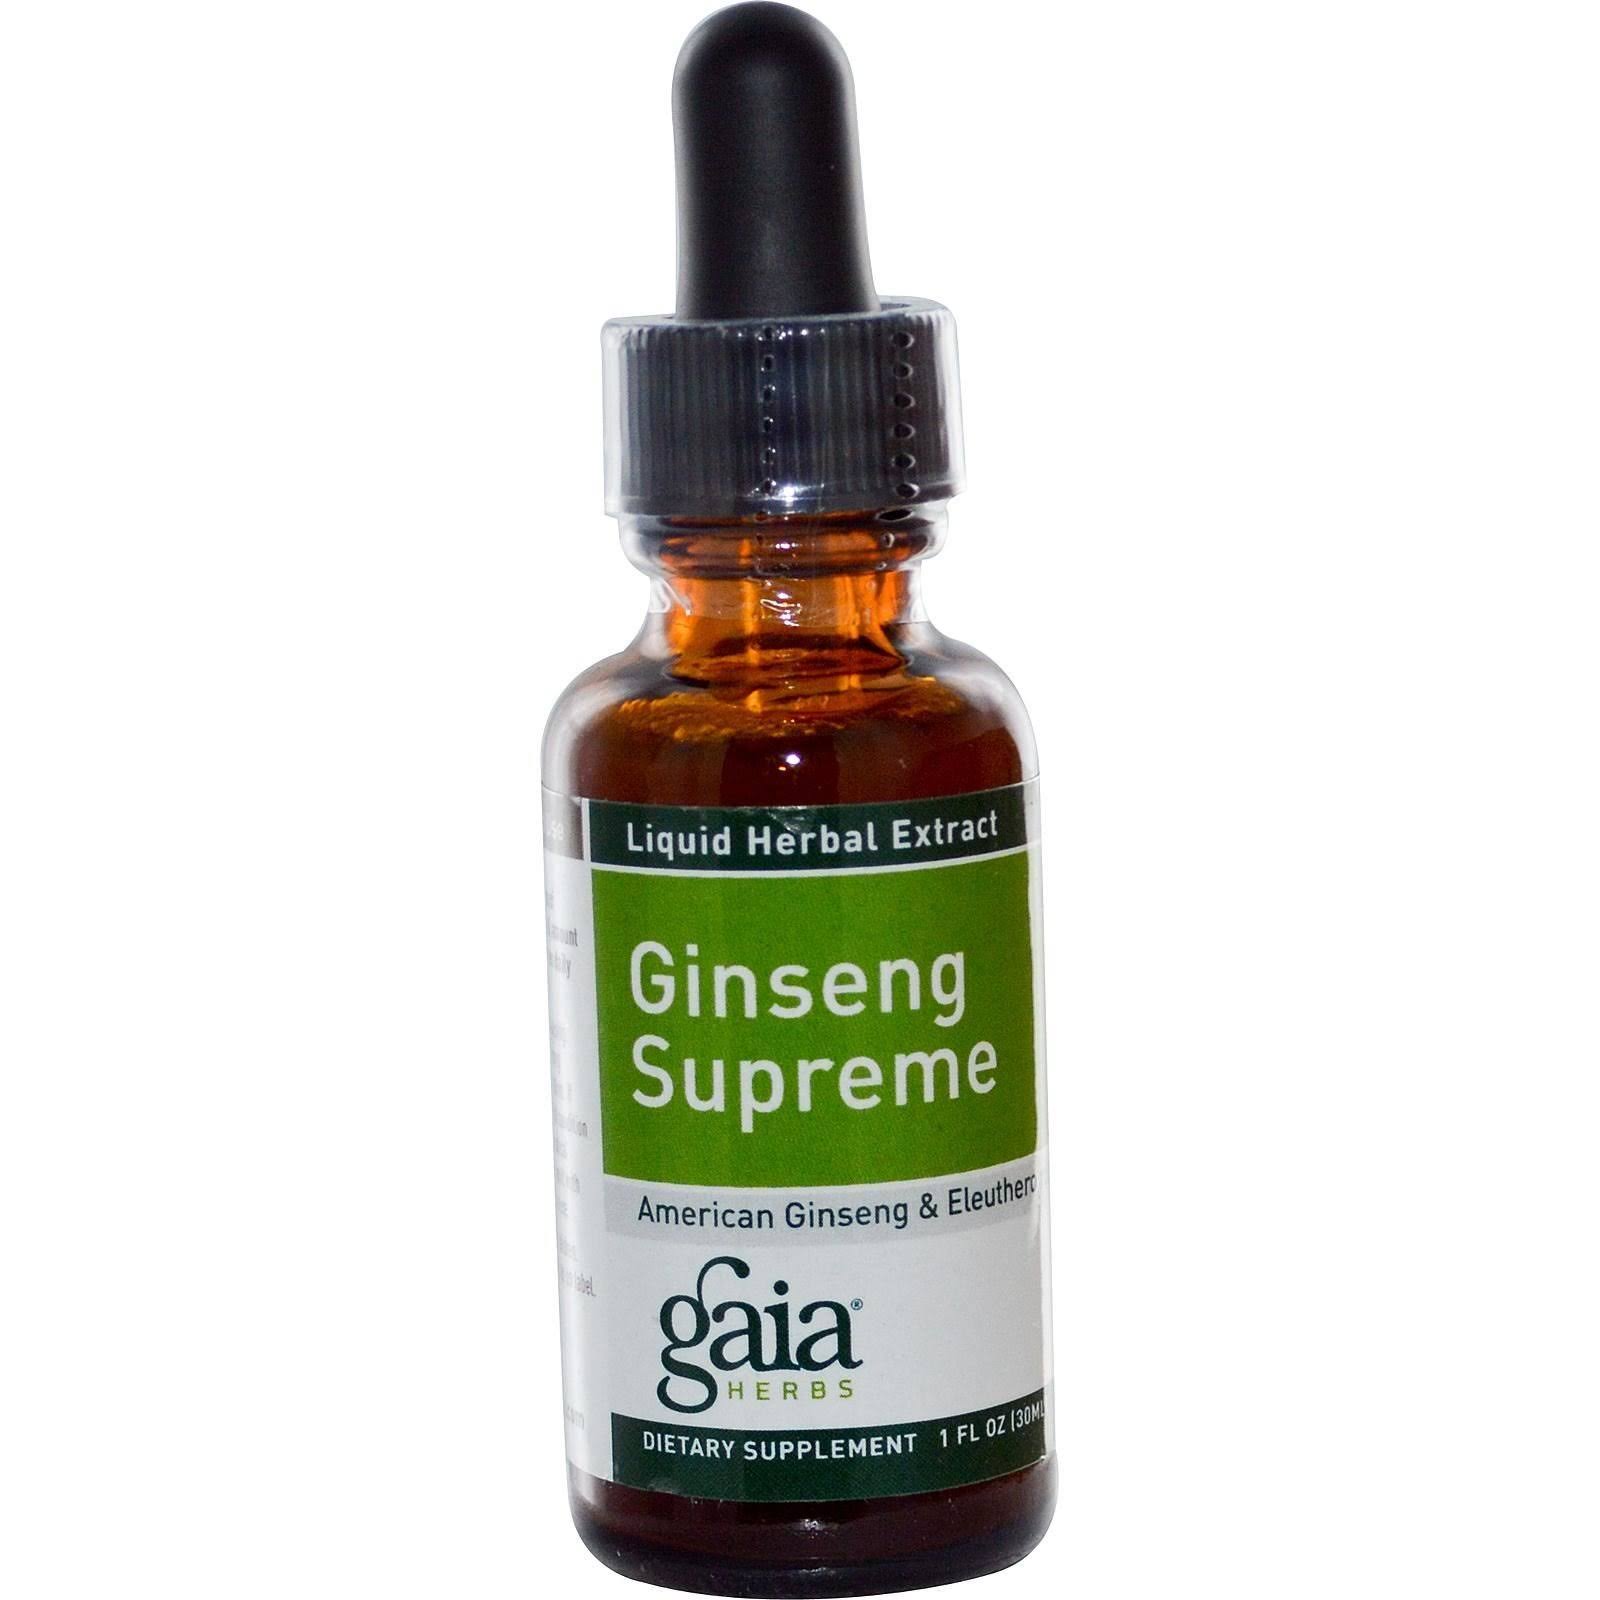 Gaia Herbs Ginseng Supreme Extract - 1oz